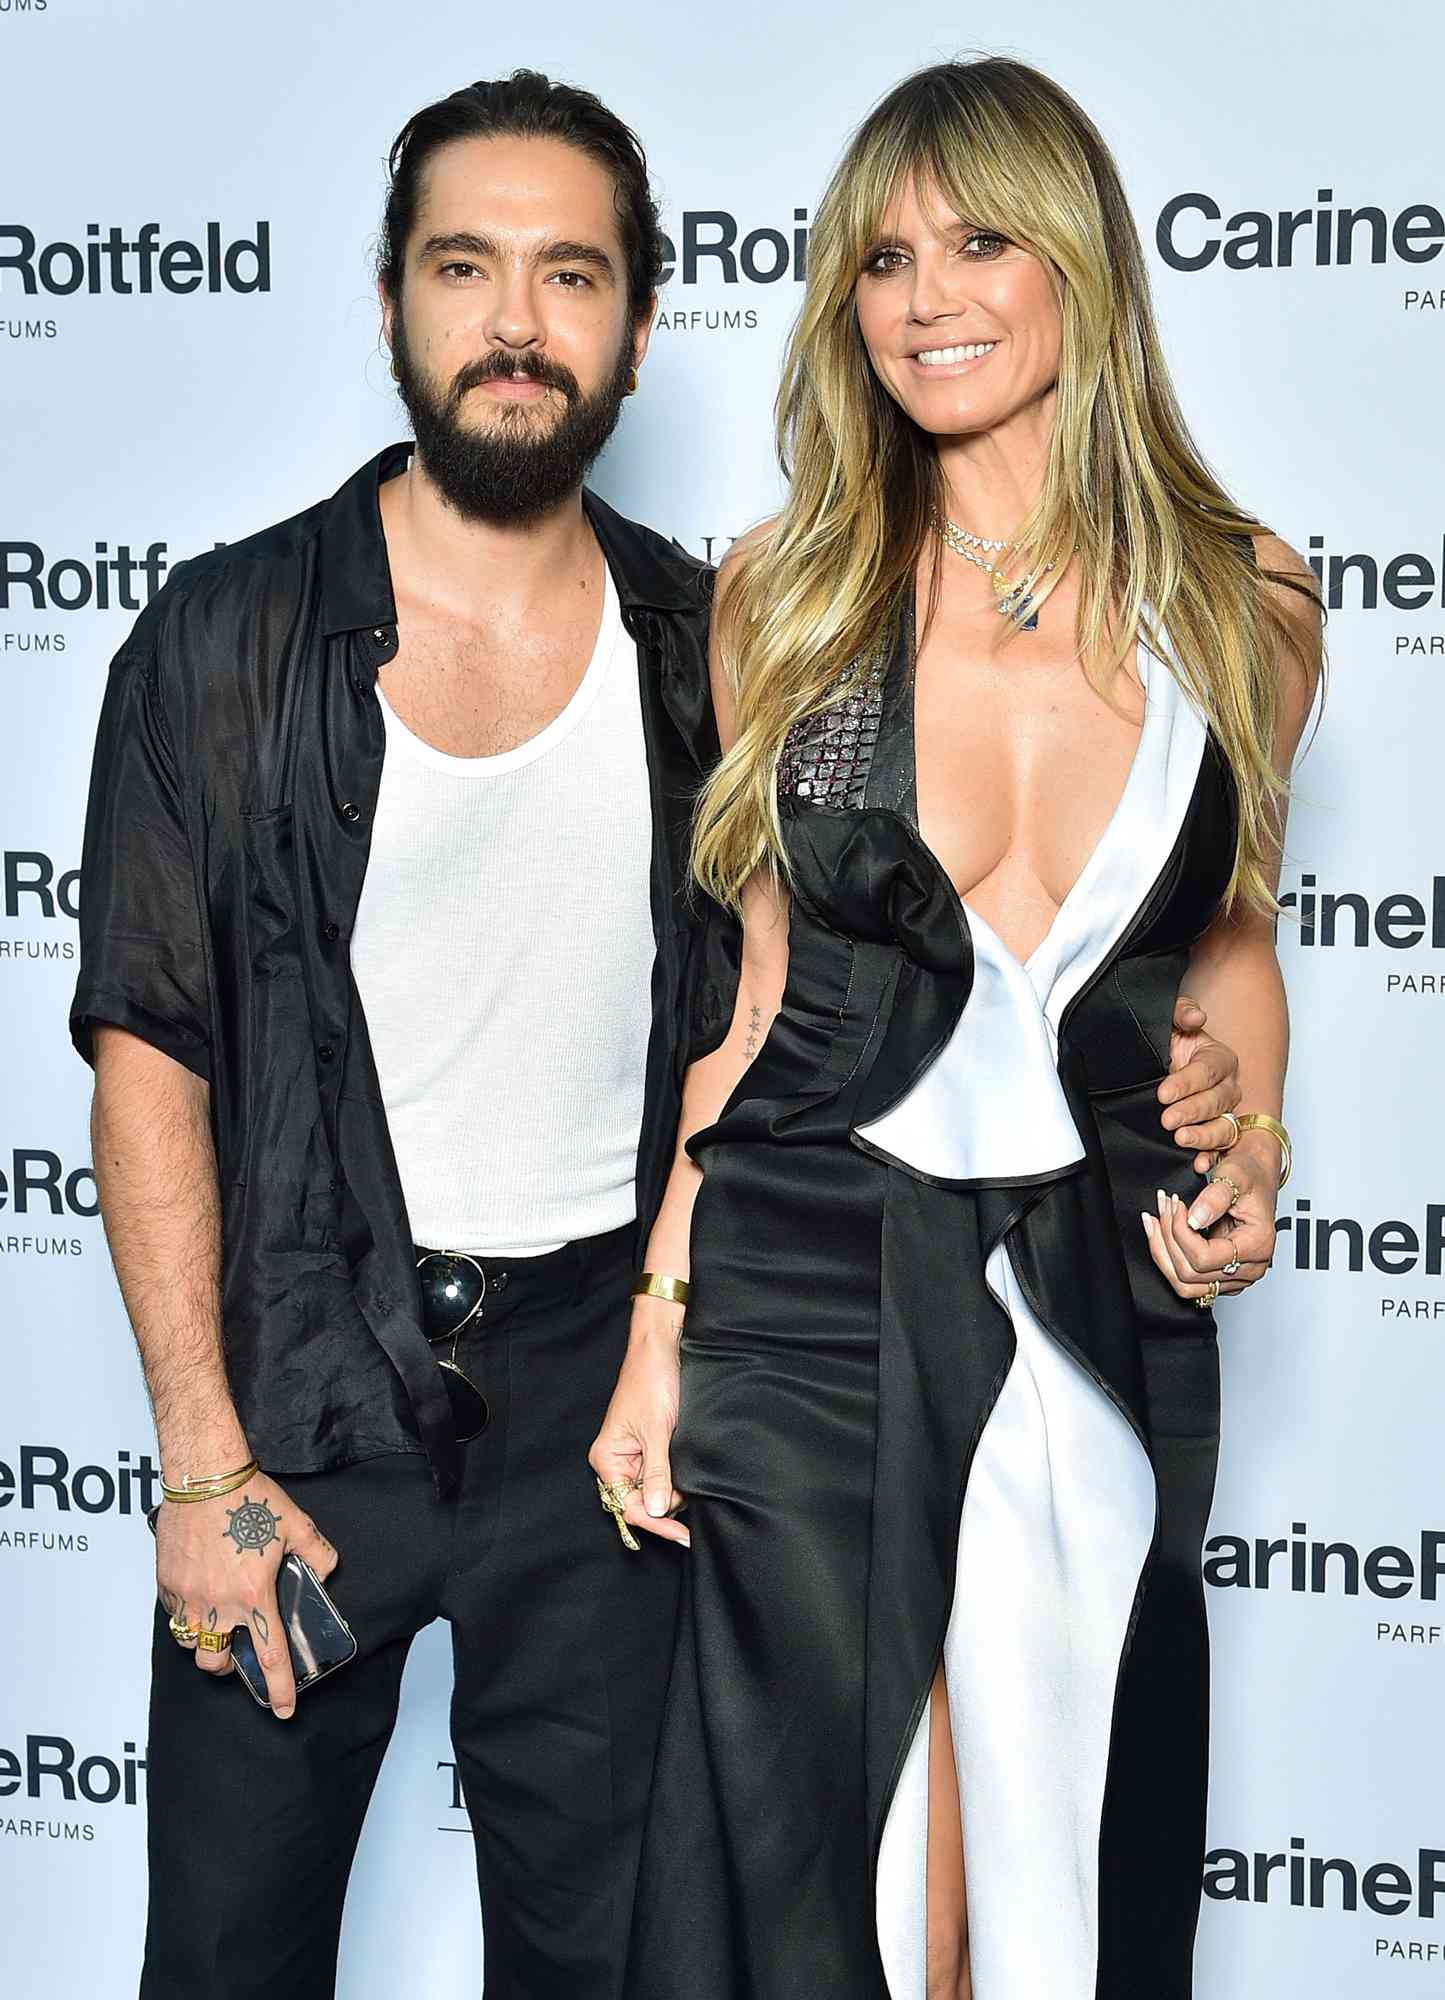 Who Is Heidi Klum's Husband? All About Tom Kaulitz